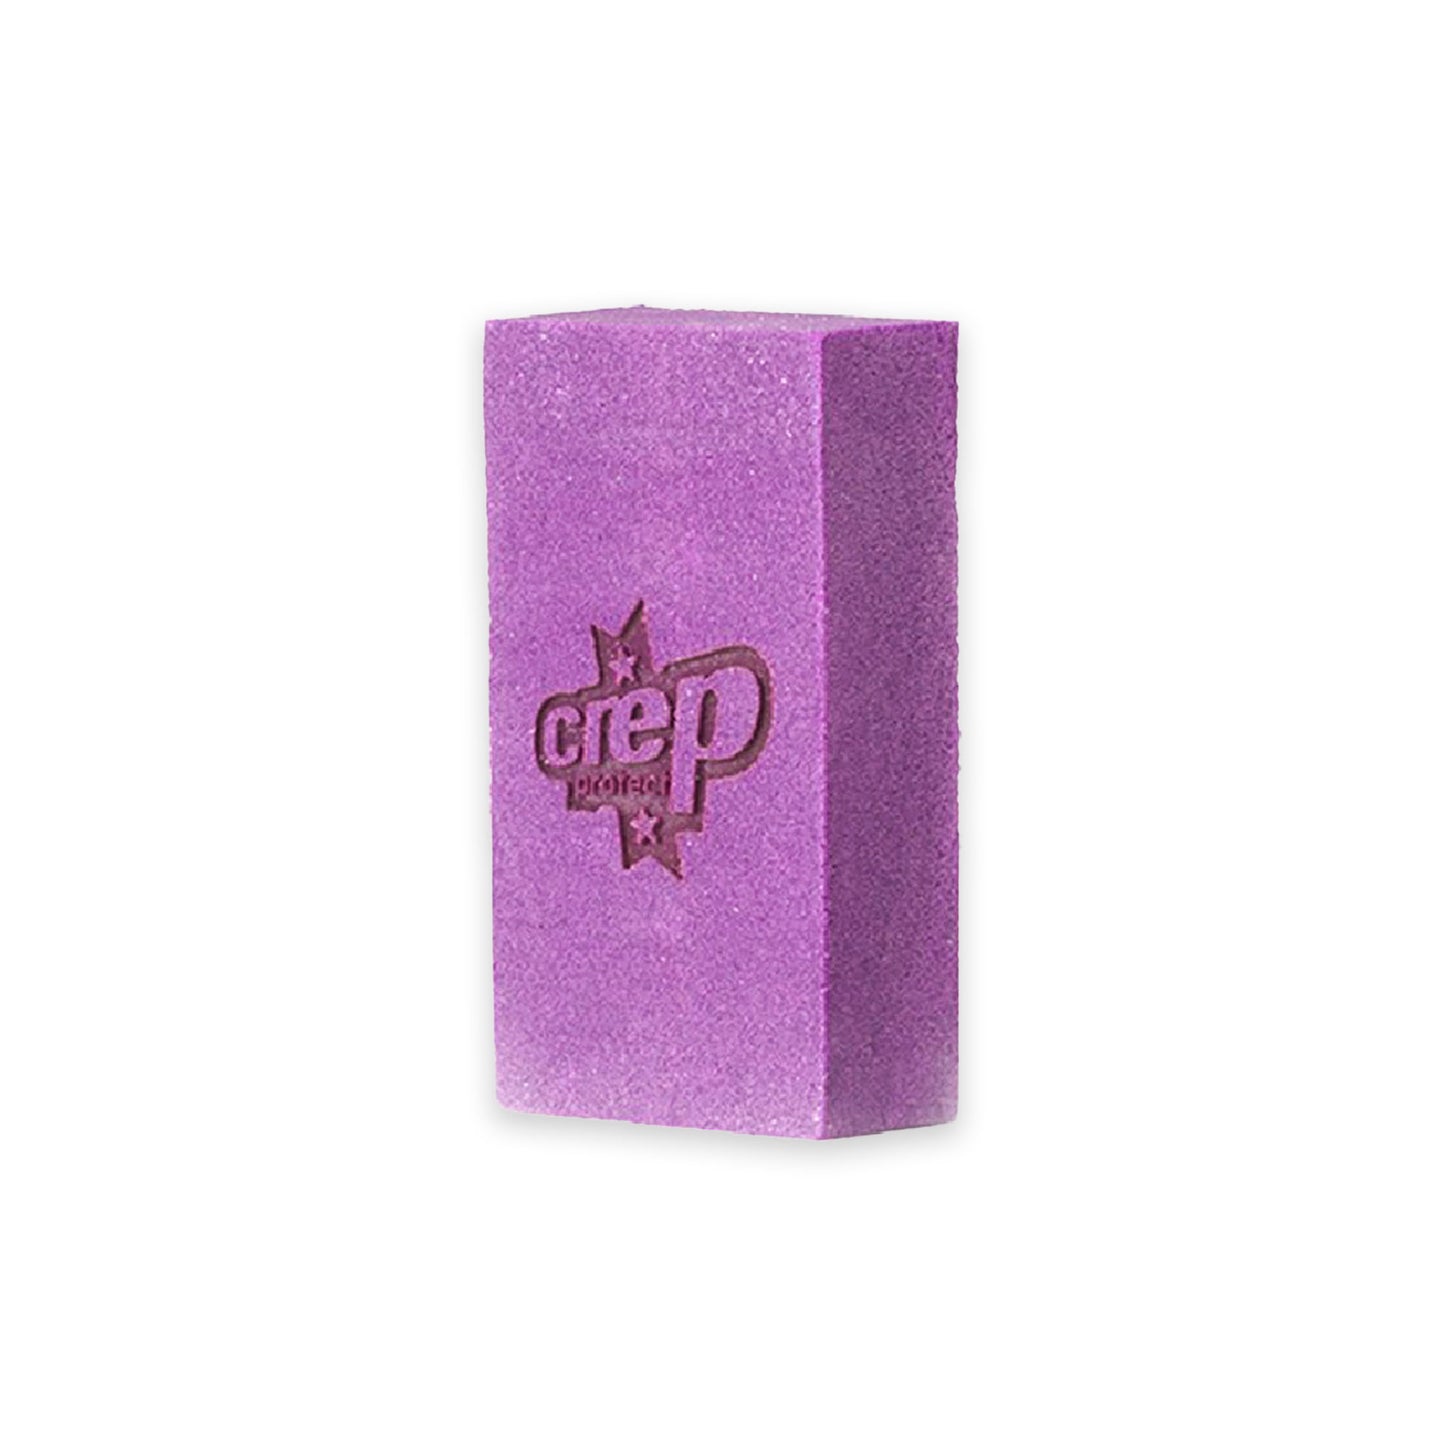 Crep Protect Eraser